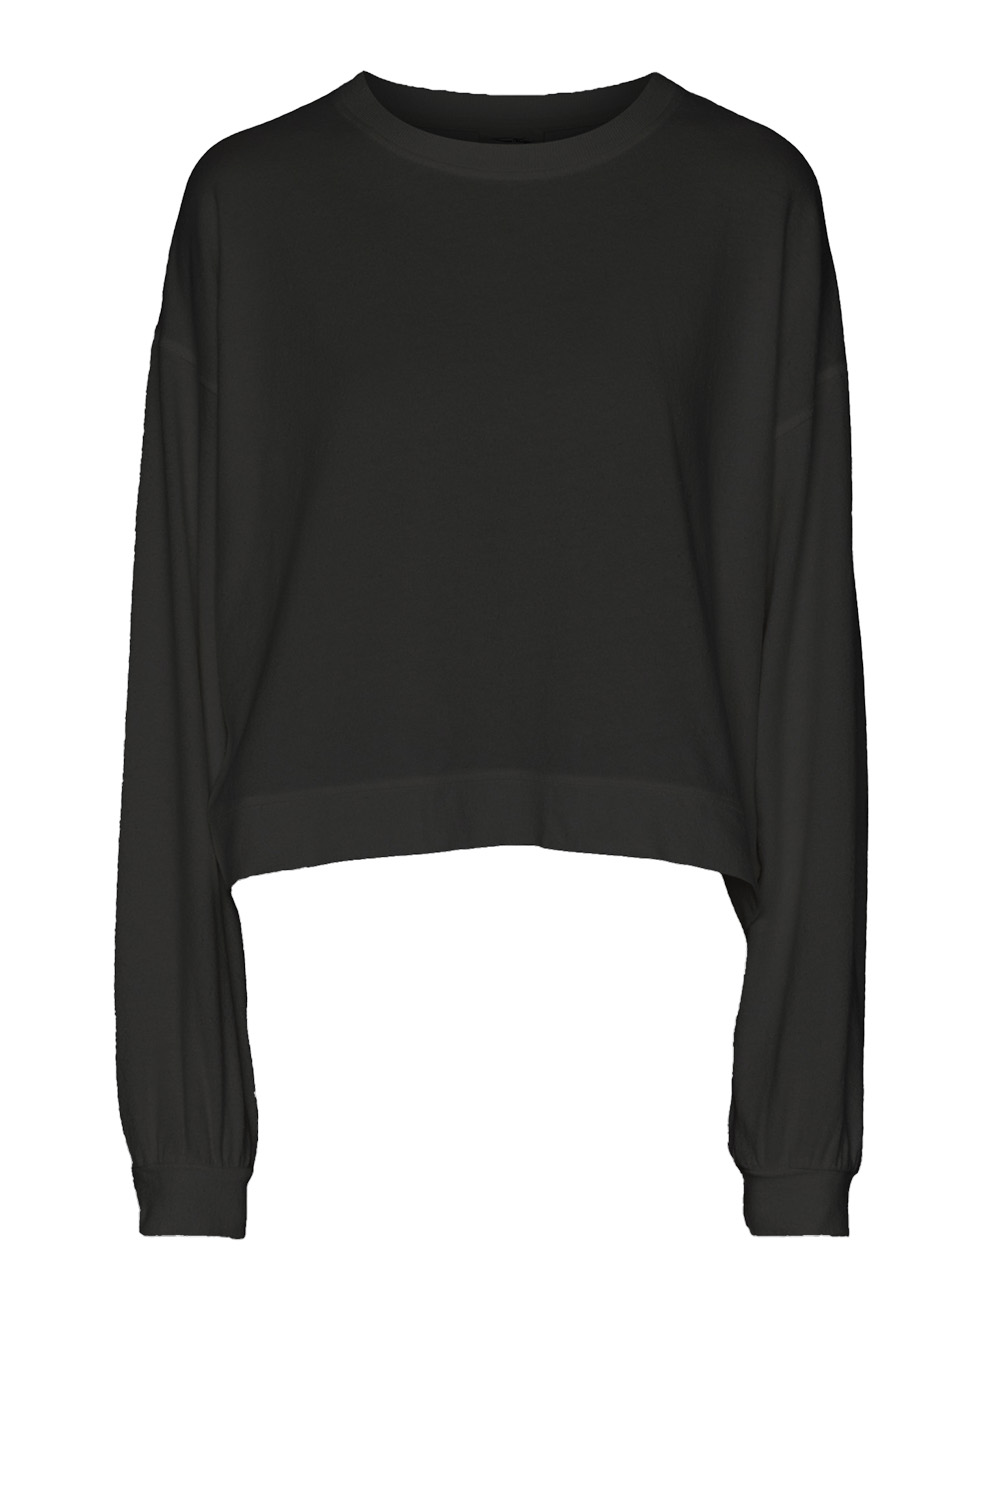 American vintage Jersey zachte sweater Rakabay zwart